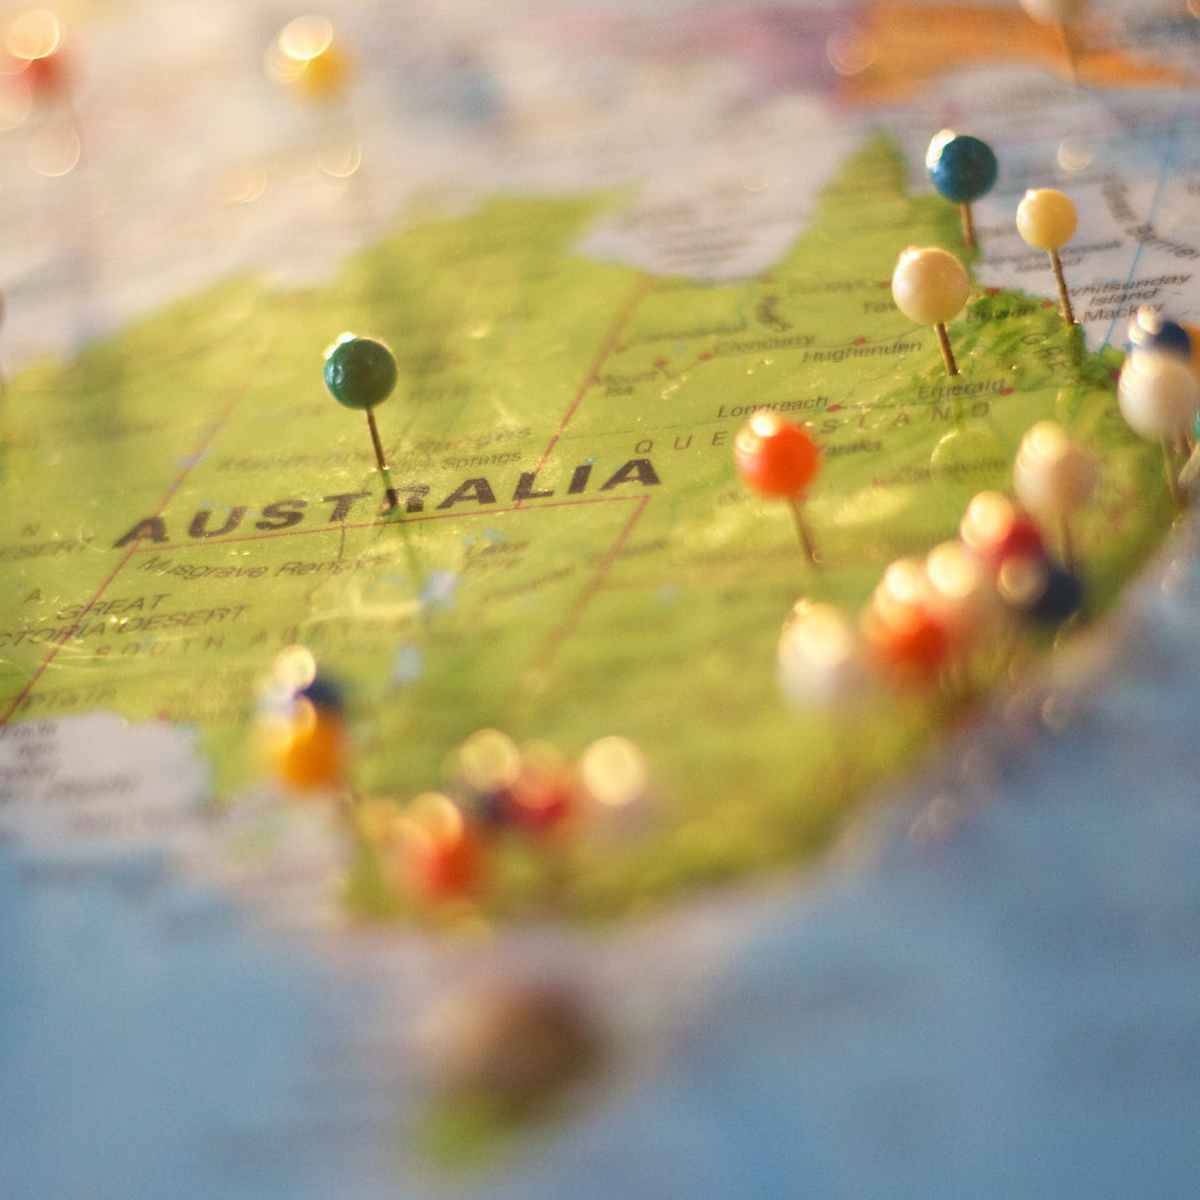 Australia’s Shocking Pandemic